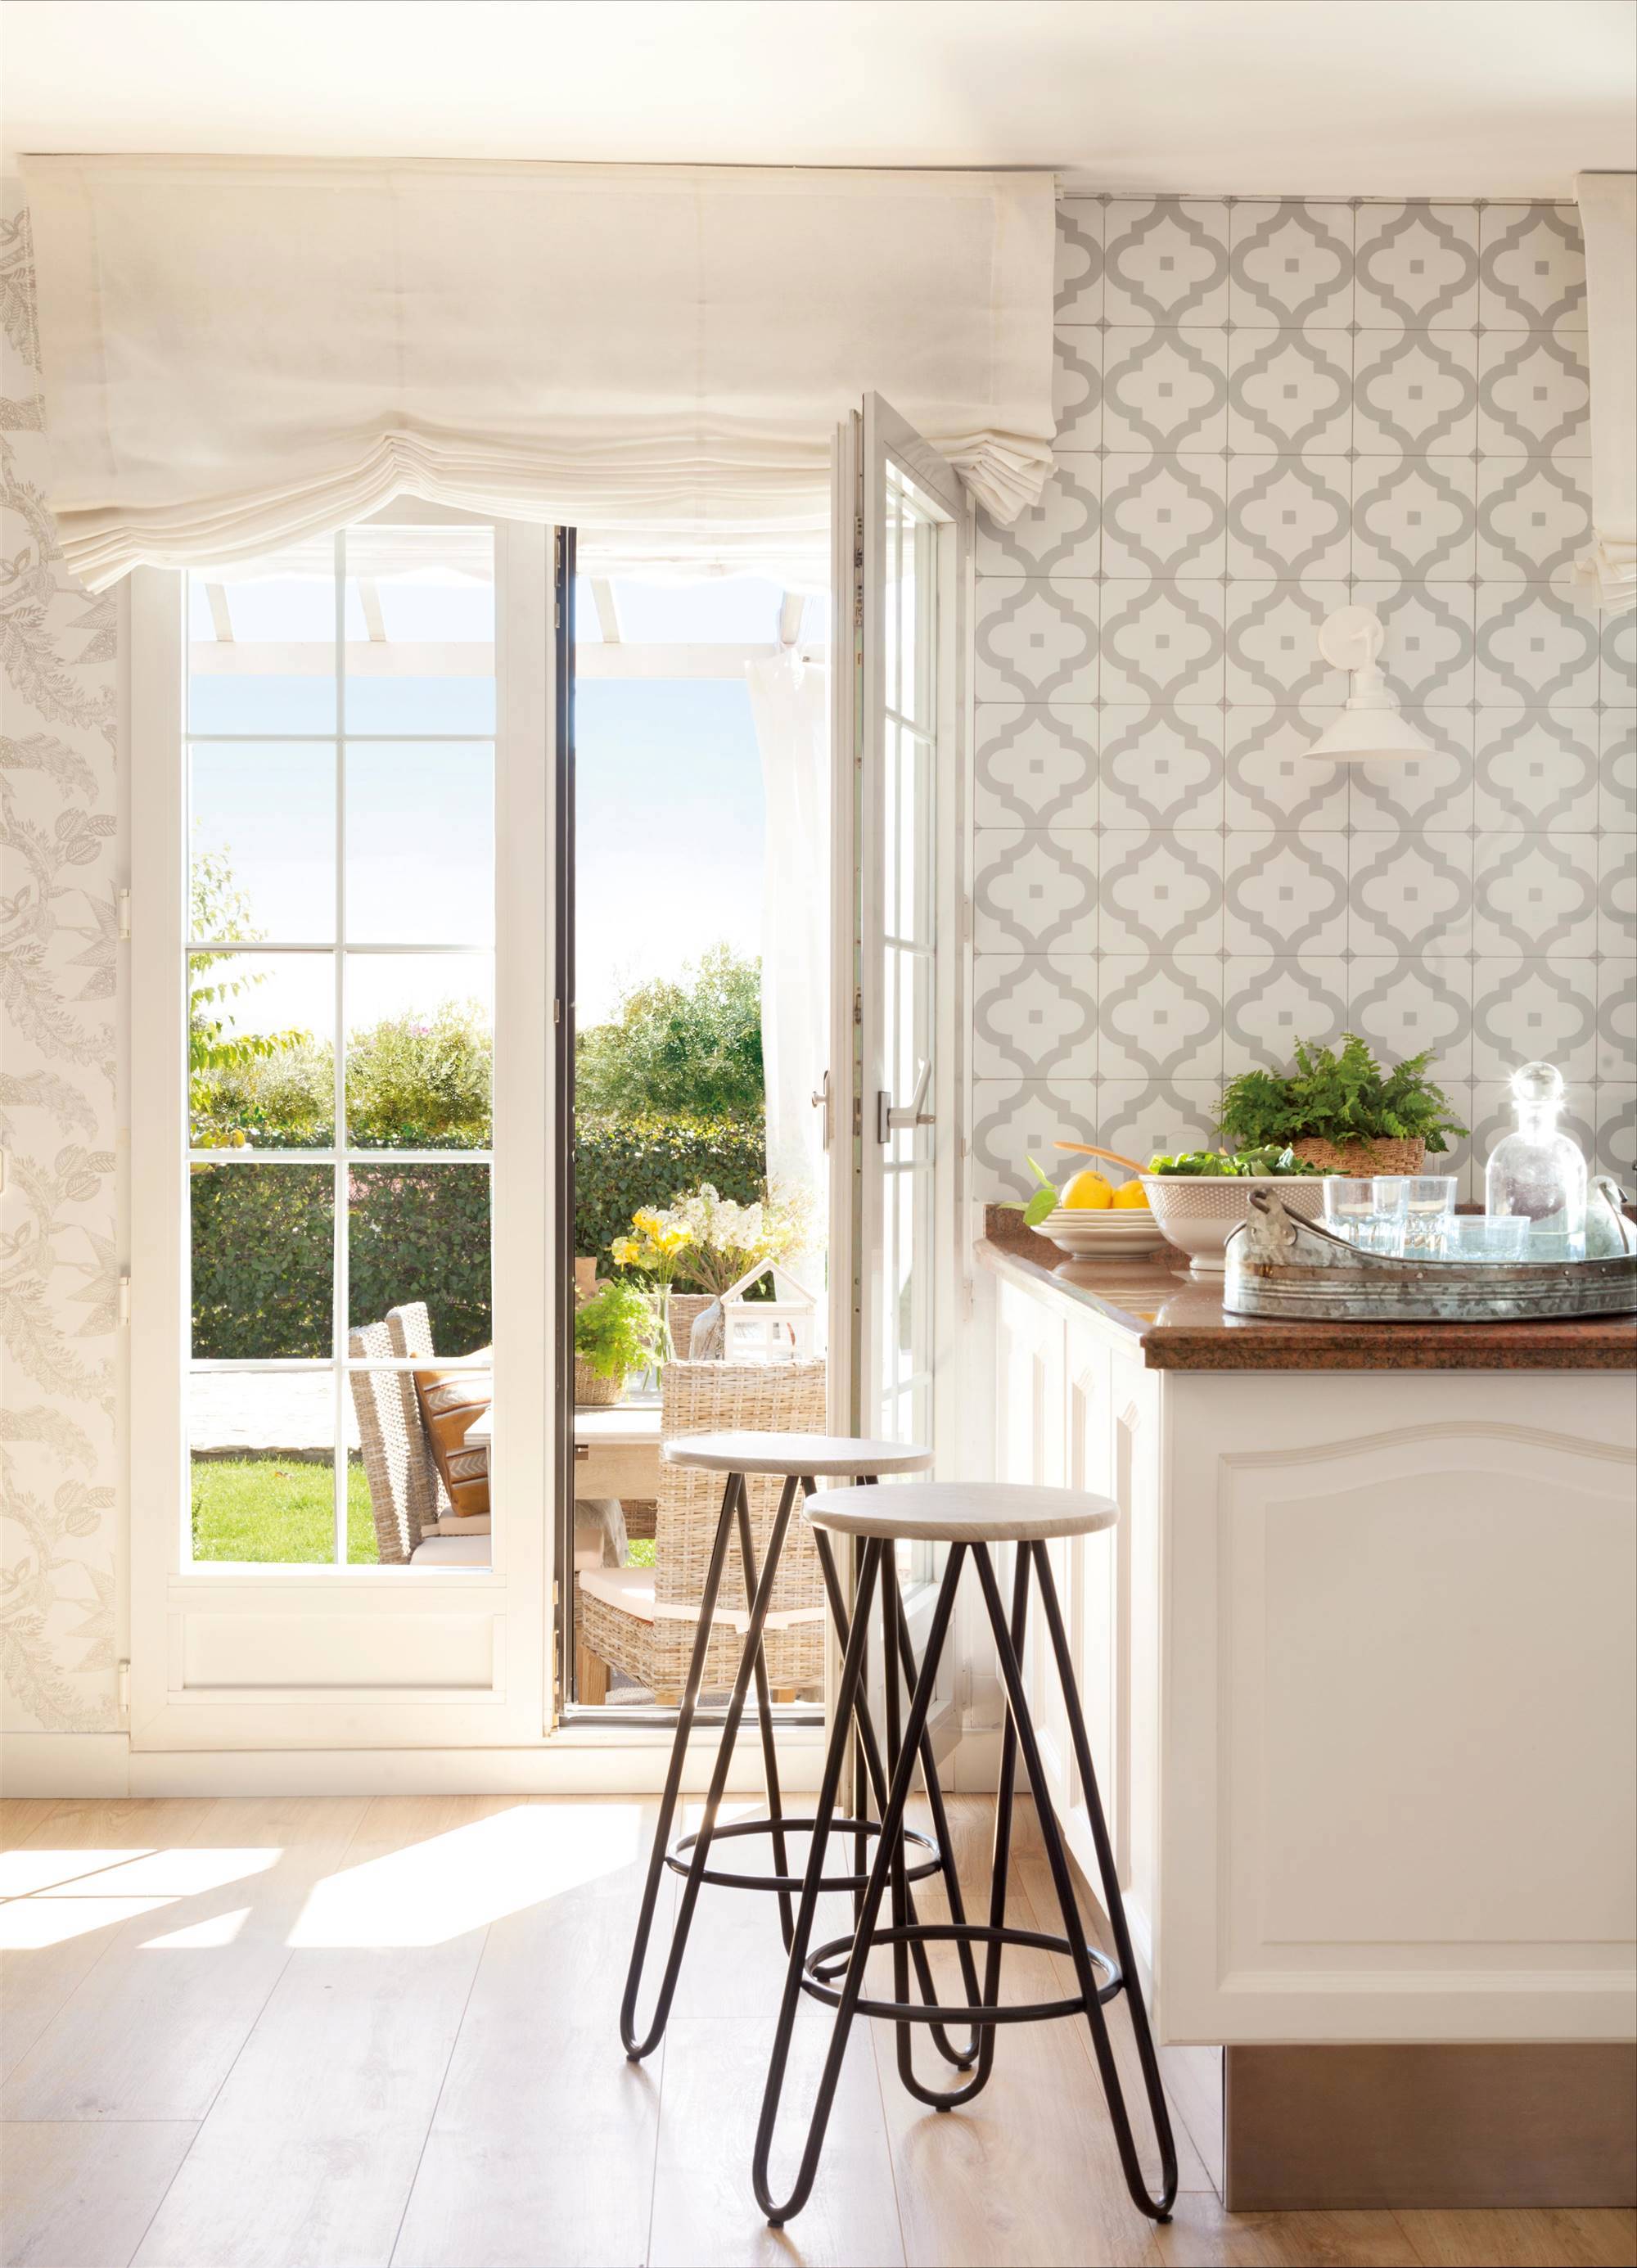 Cocina blanca con pared de azulejos decorados.